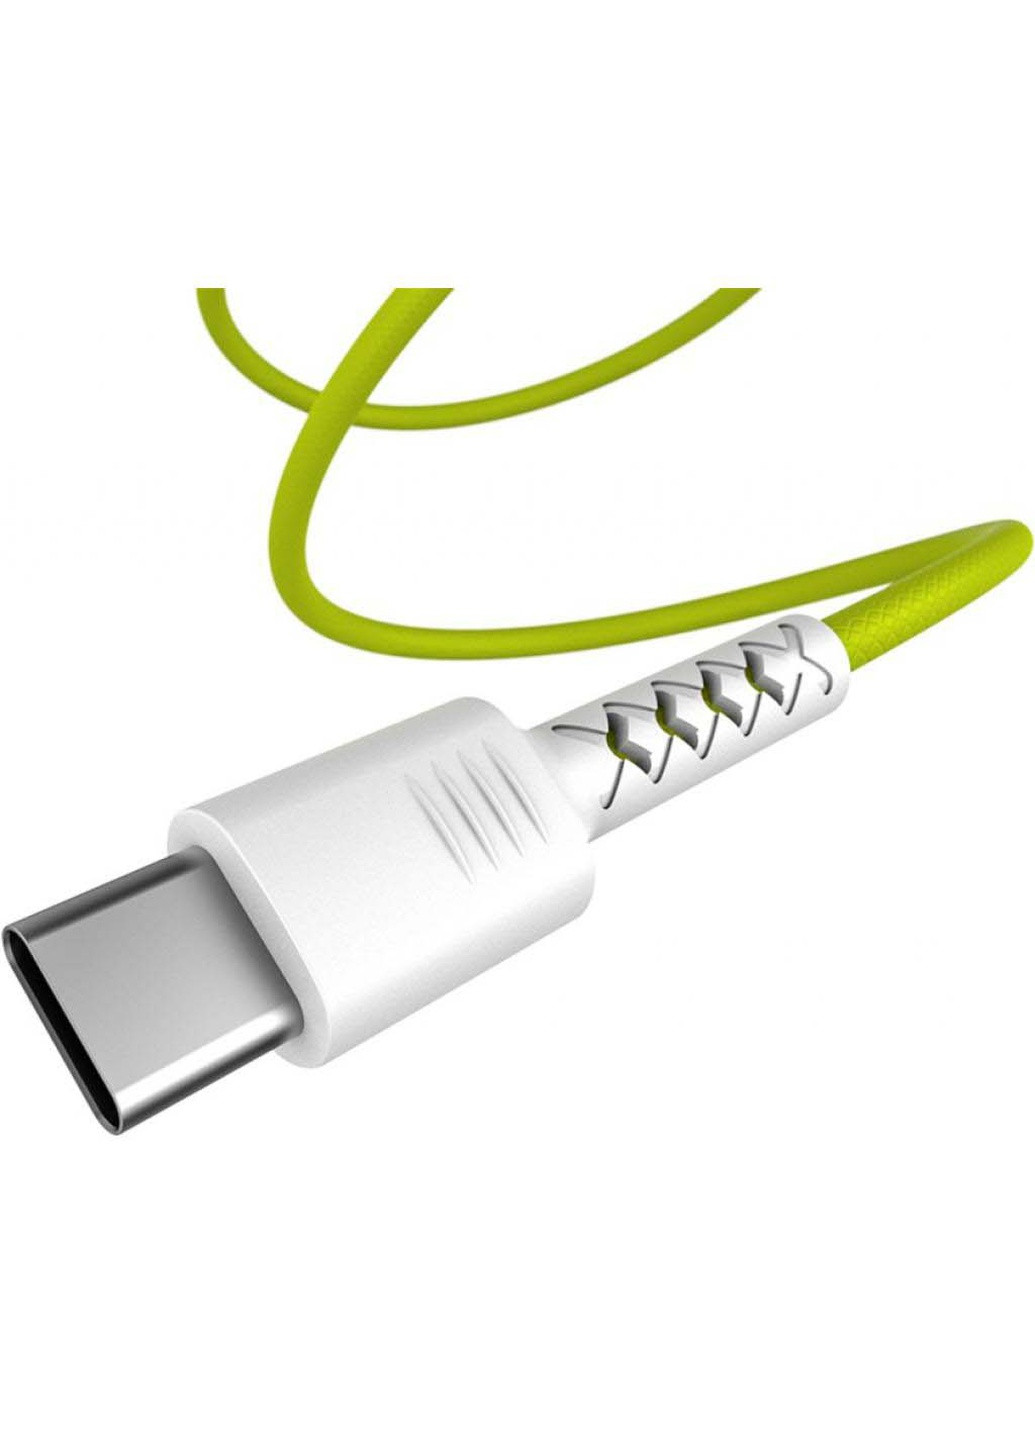 Дата кабель USB 2.0 AM to Type-C 1.0m Soft white / lime (4897058531169) Pixus usb 2.0 am to type-c 1.0m soft white/lime (239382799)